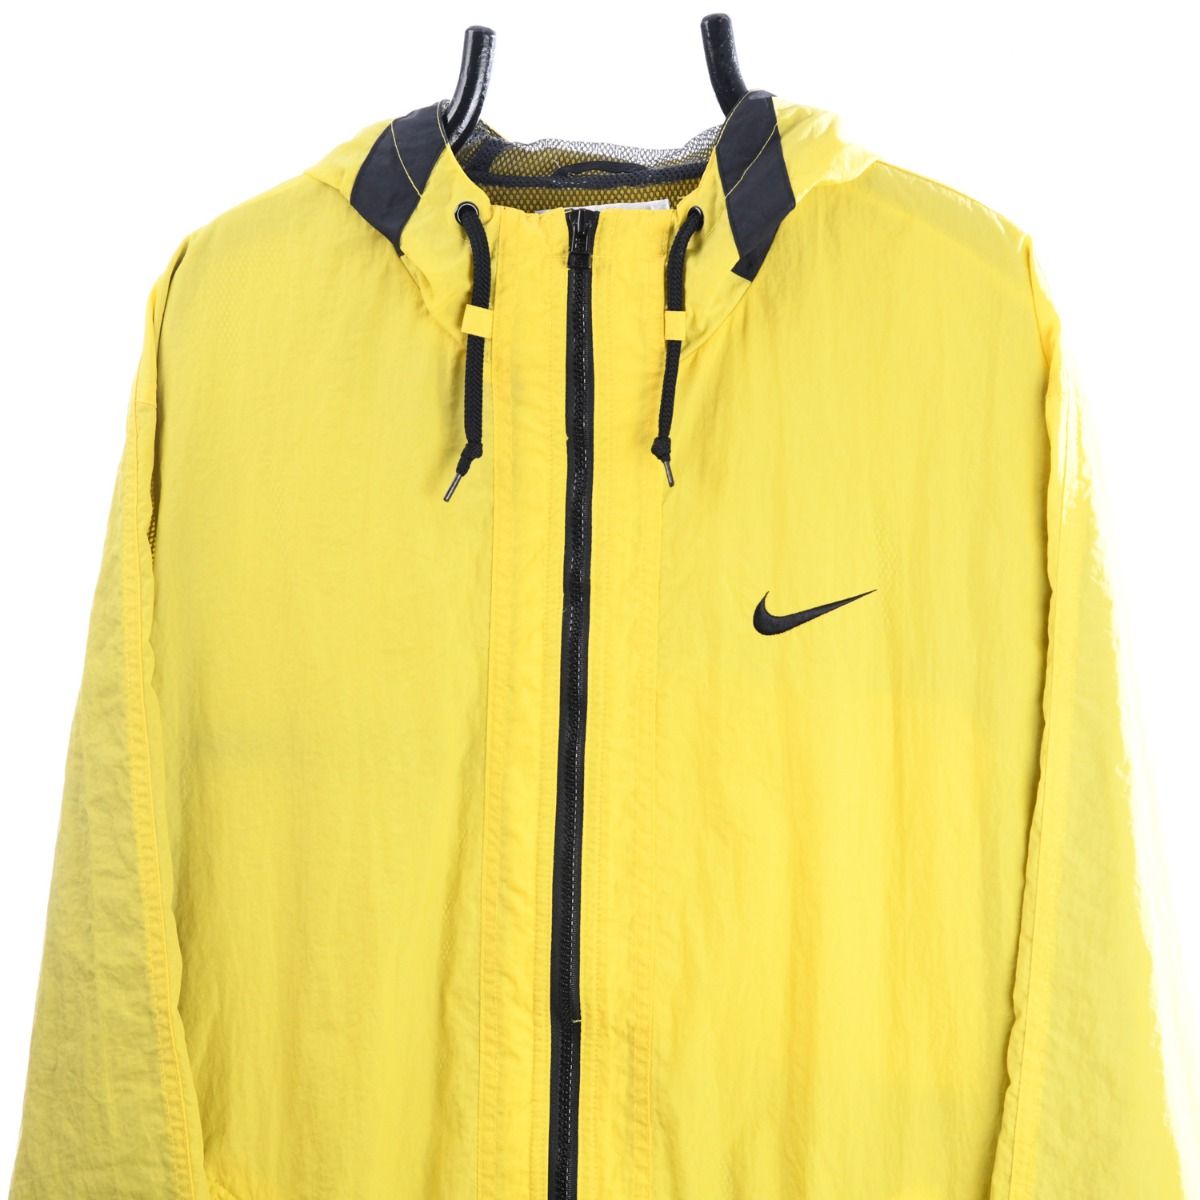 Nike 1990s Shell Yellow Jacket